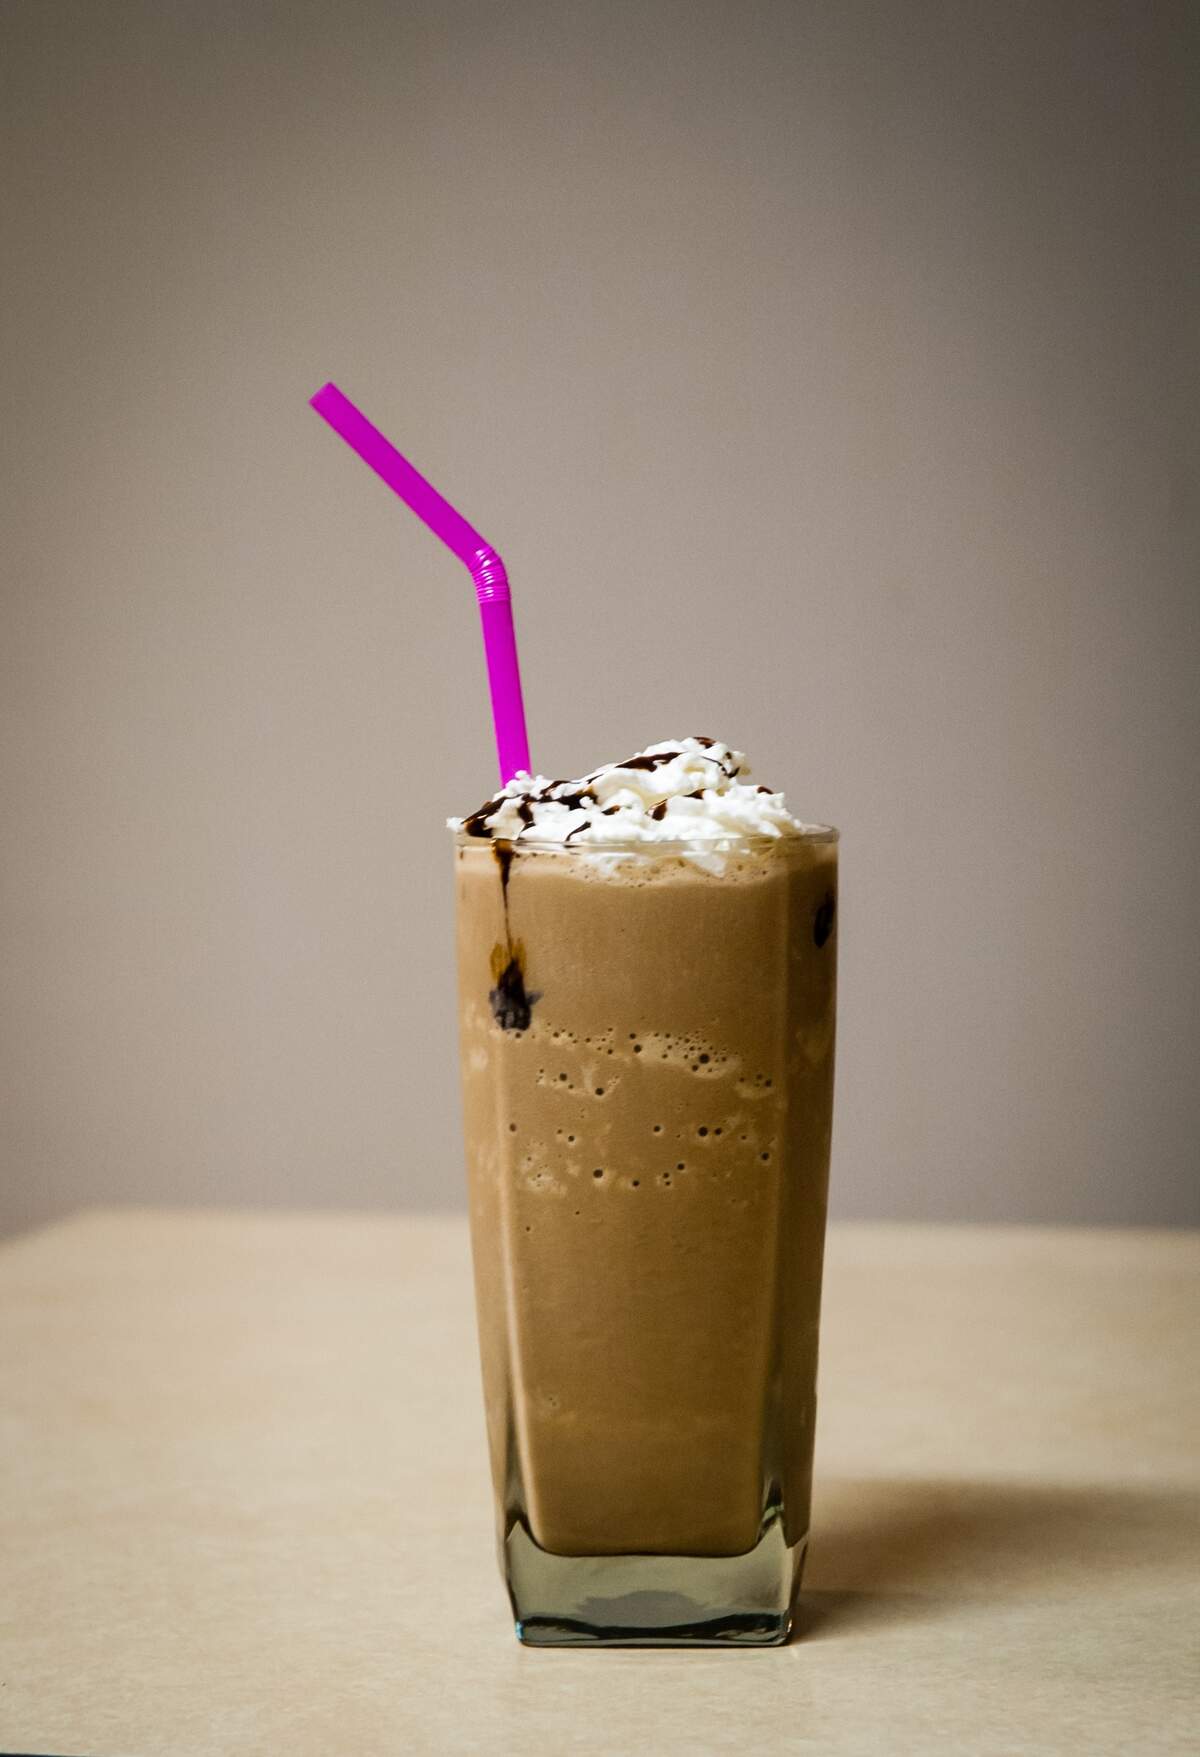 Image for National Coffee Milkshake Day